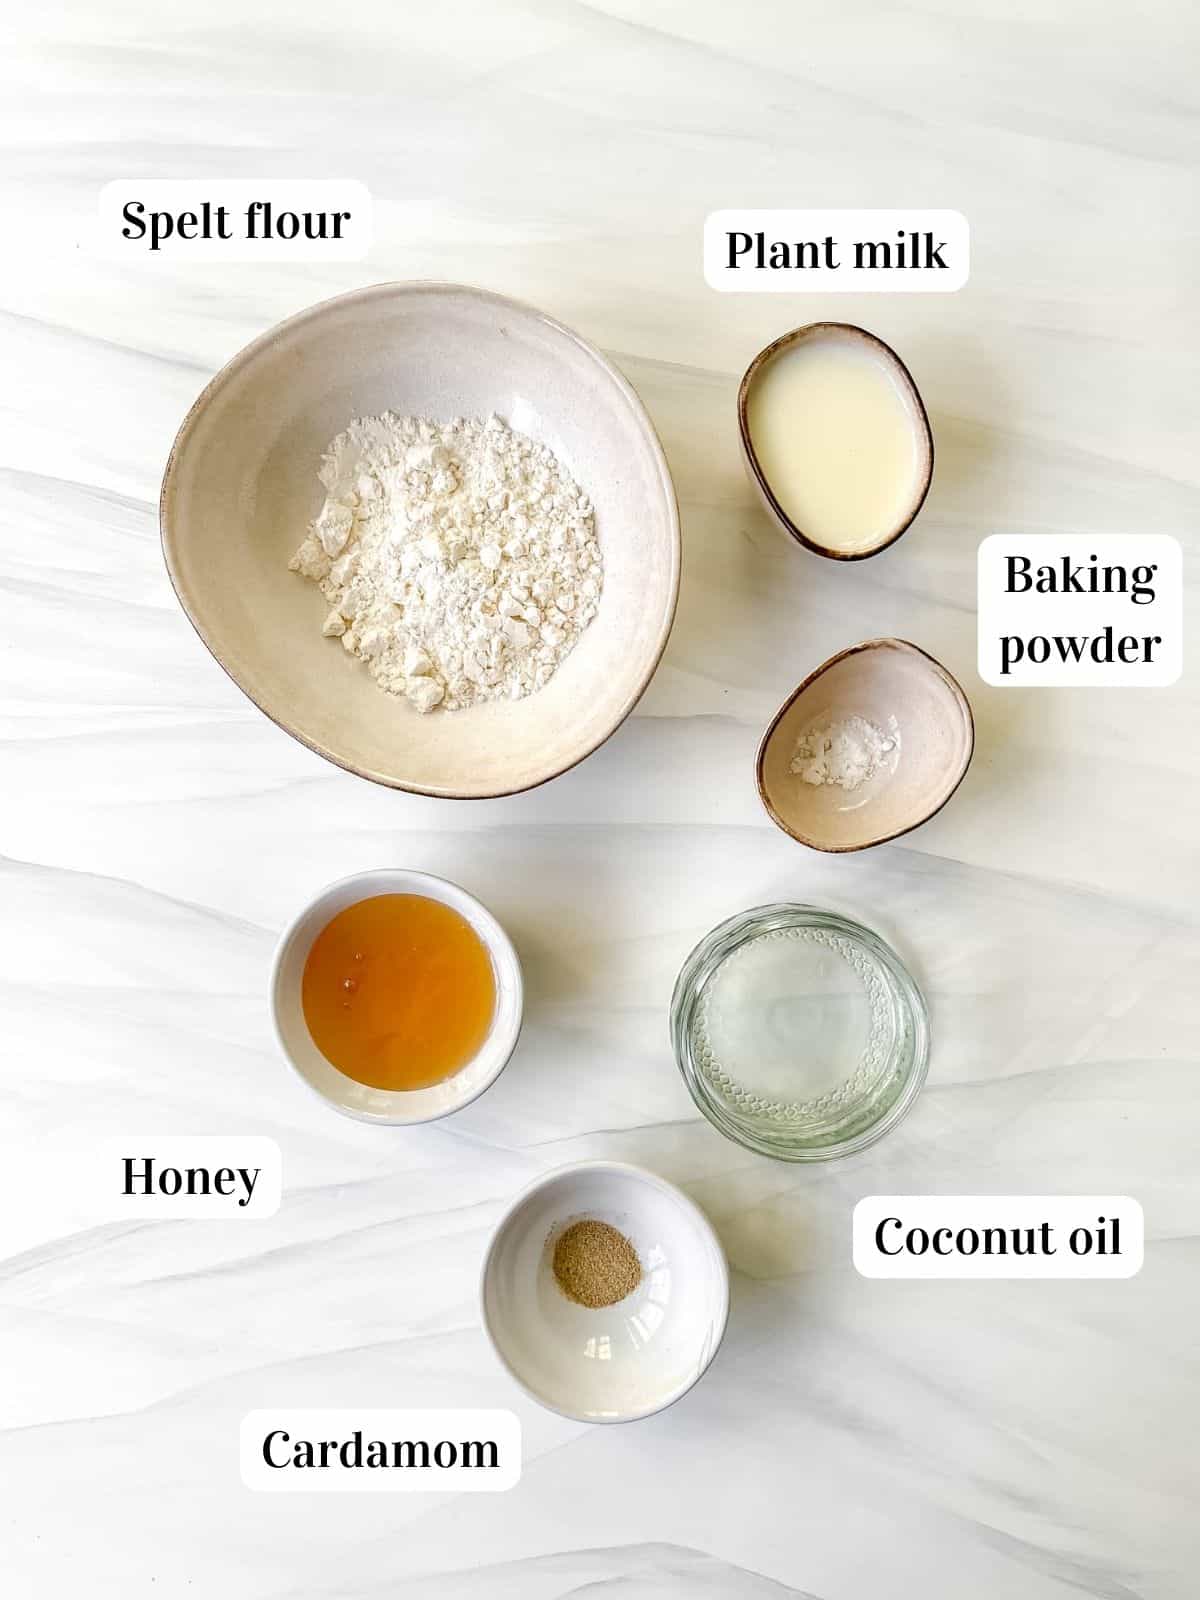 individually labelled ingredients to make honey mug cake including baking powder, cardamom and spelt flour.